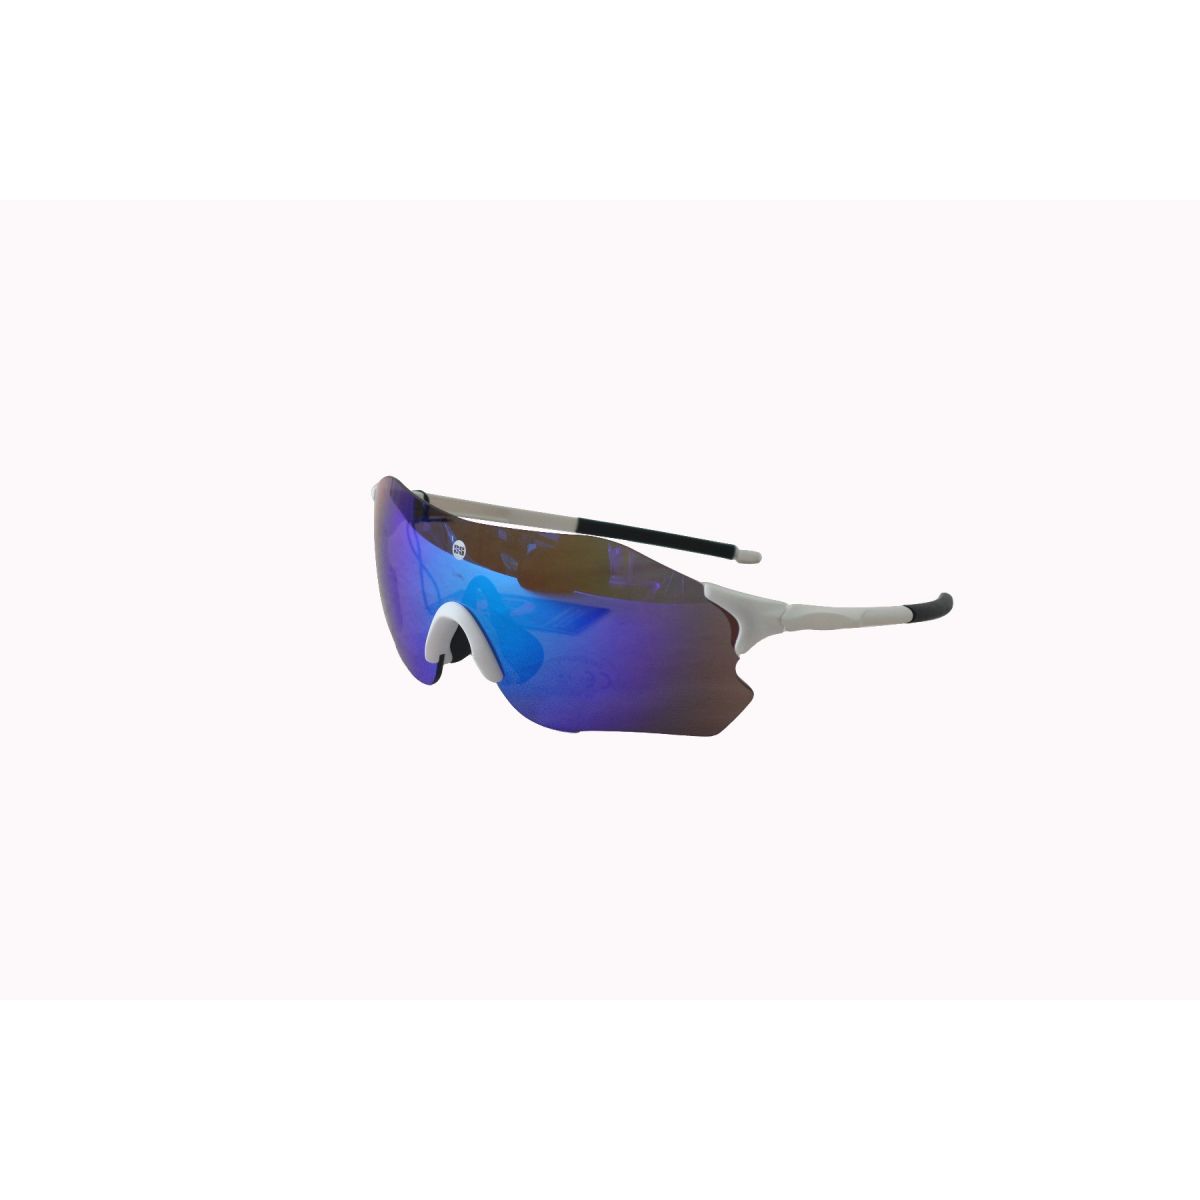 Pro Bowl Sunglasses : r/sunglasses